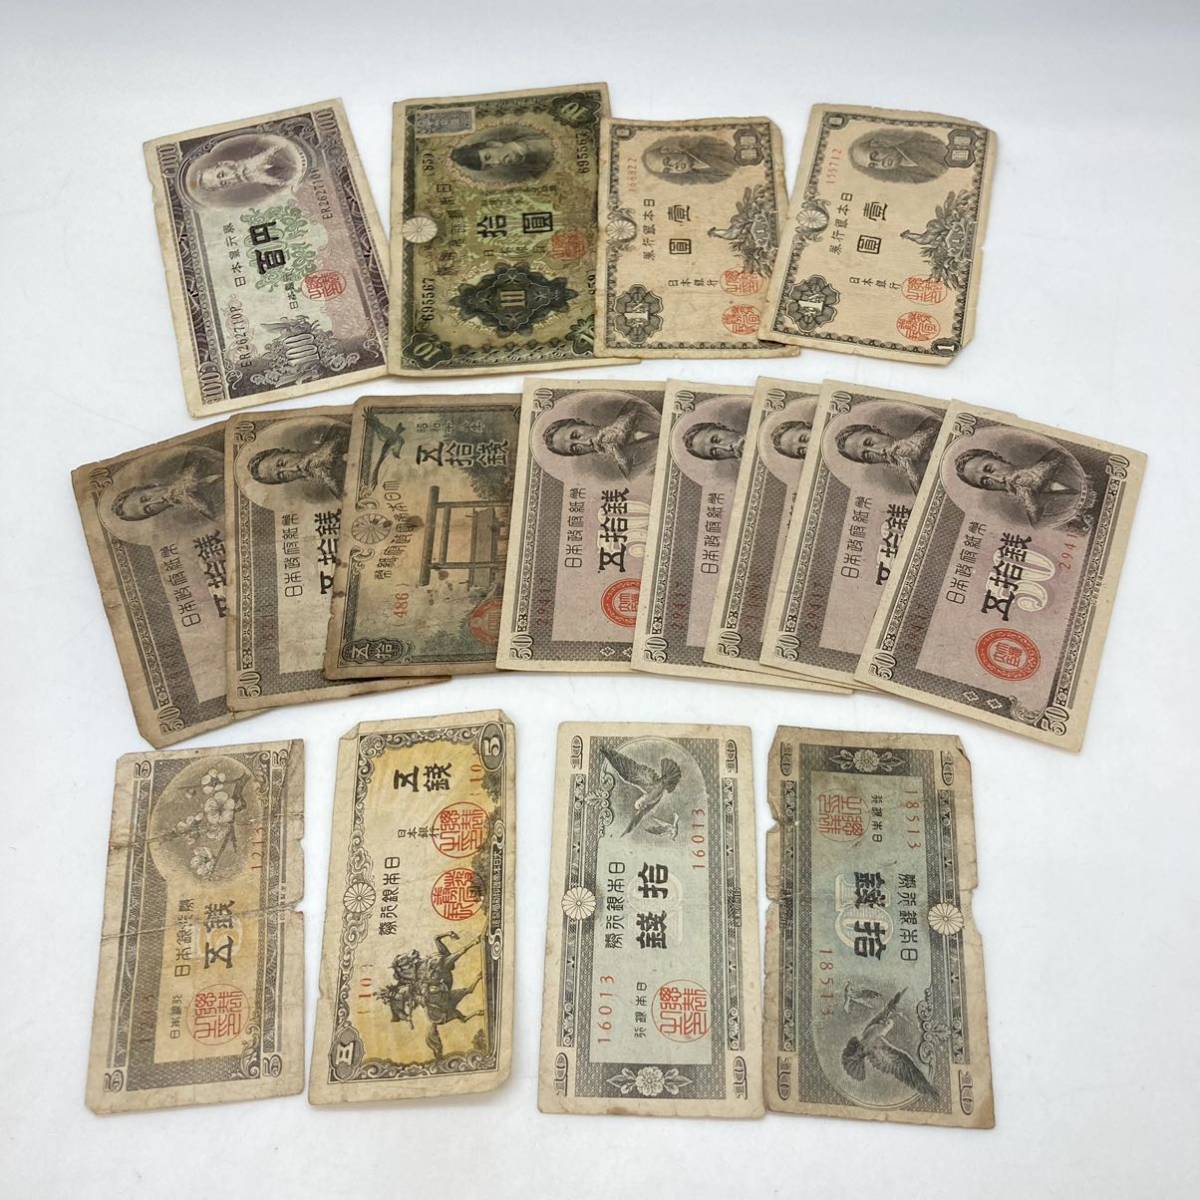 5.11TO-C1469☆旧紙幣16枚まとめ☆古札/旧貨幣/昔のお金/通貨/貨幣